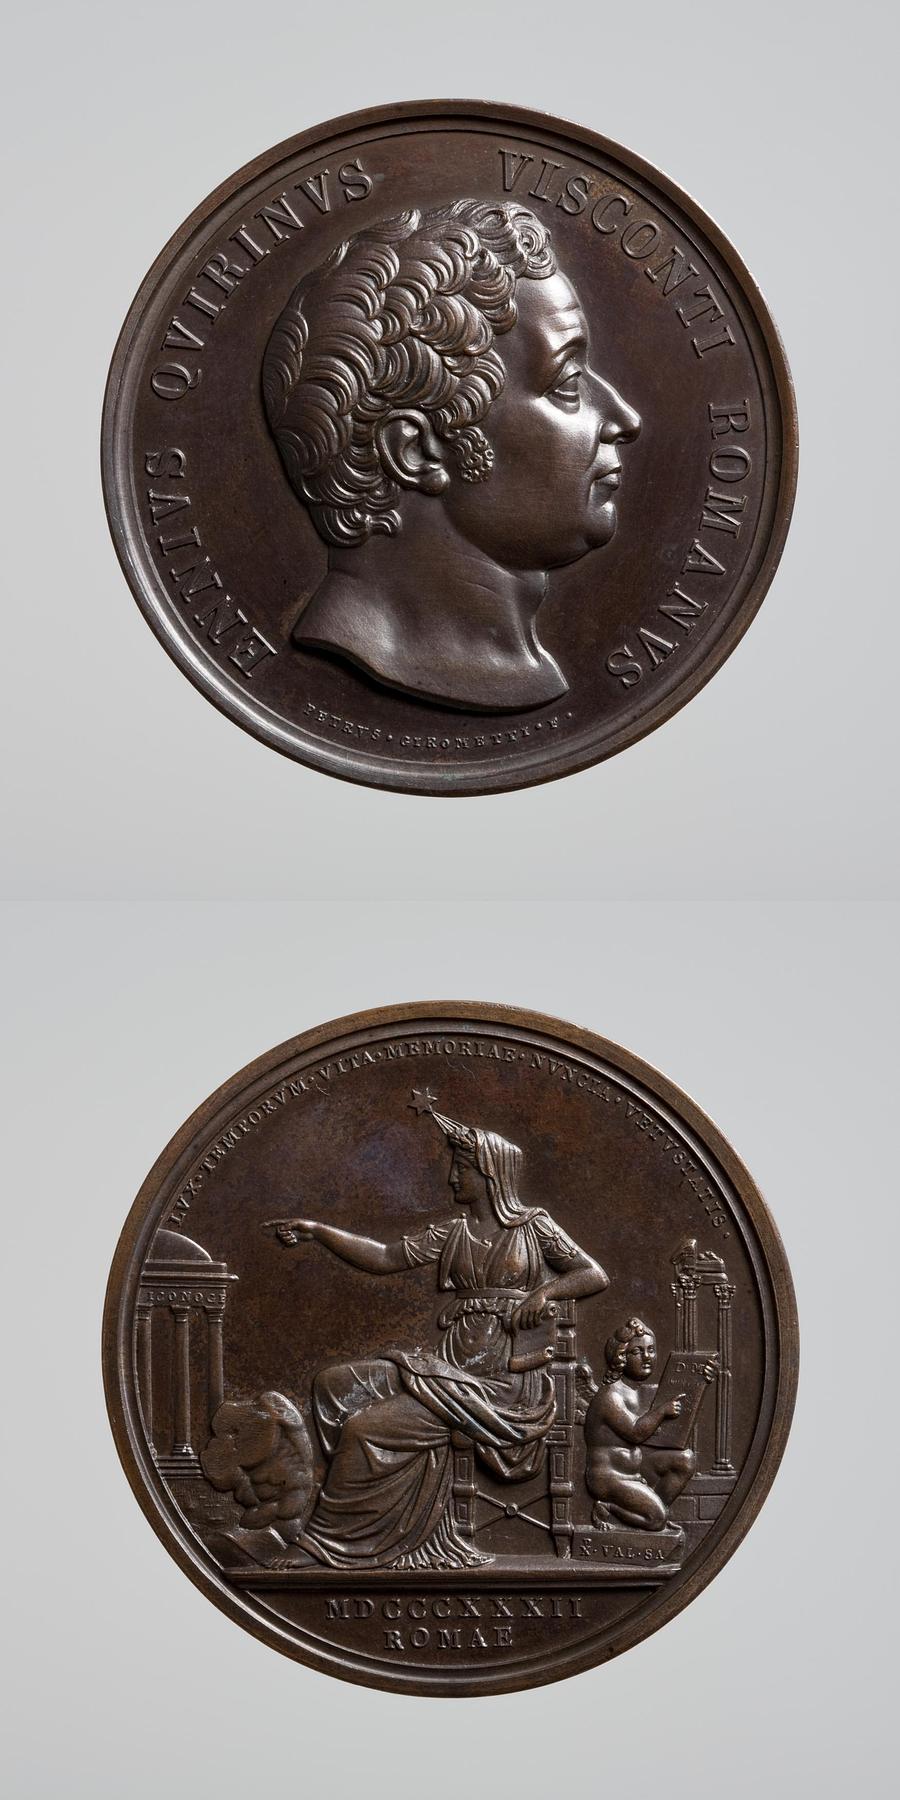 Medaljens forside: Arkæolog Ennius Quirinus Visconti. Medaljens bagside: Historien, F80